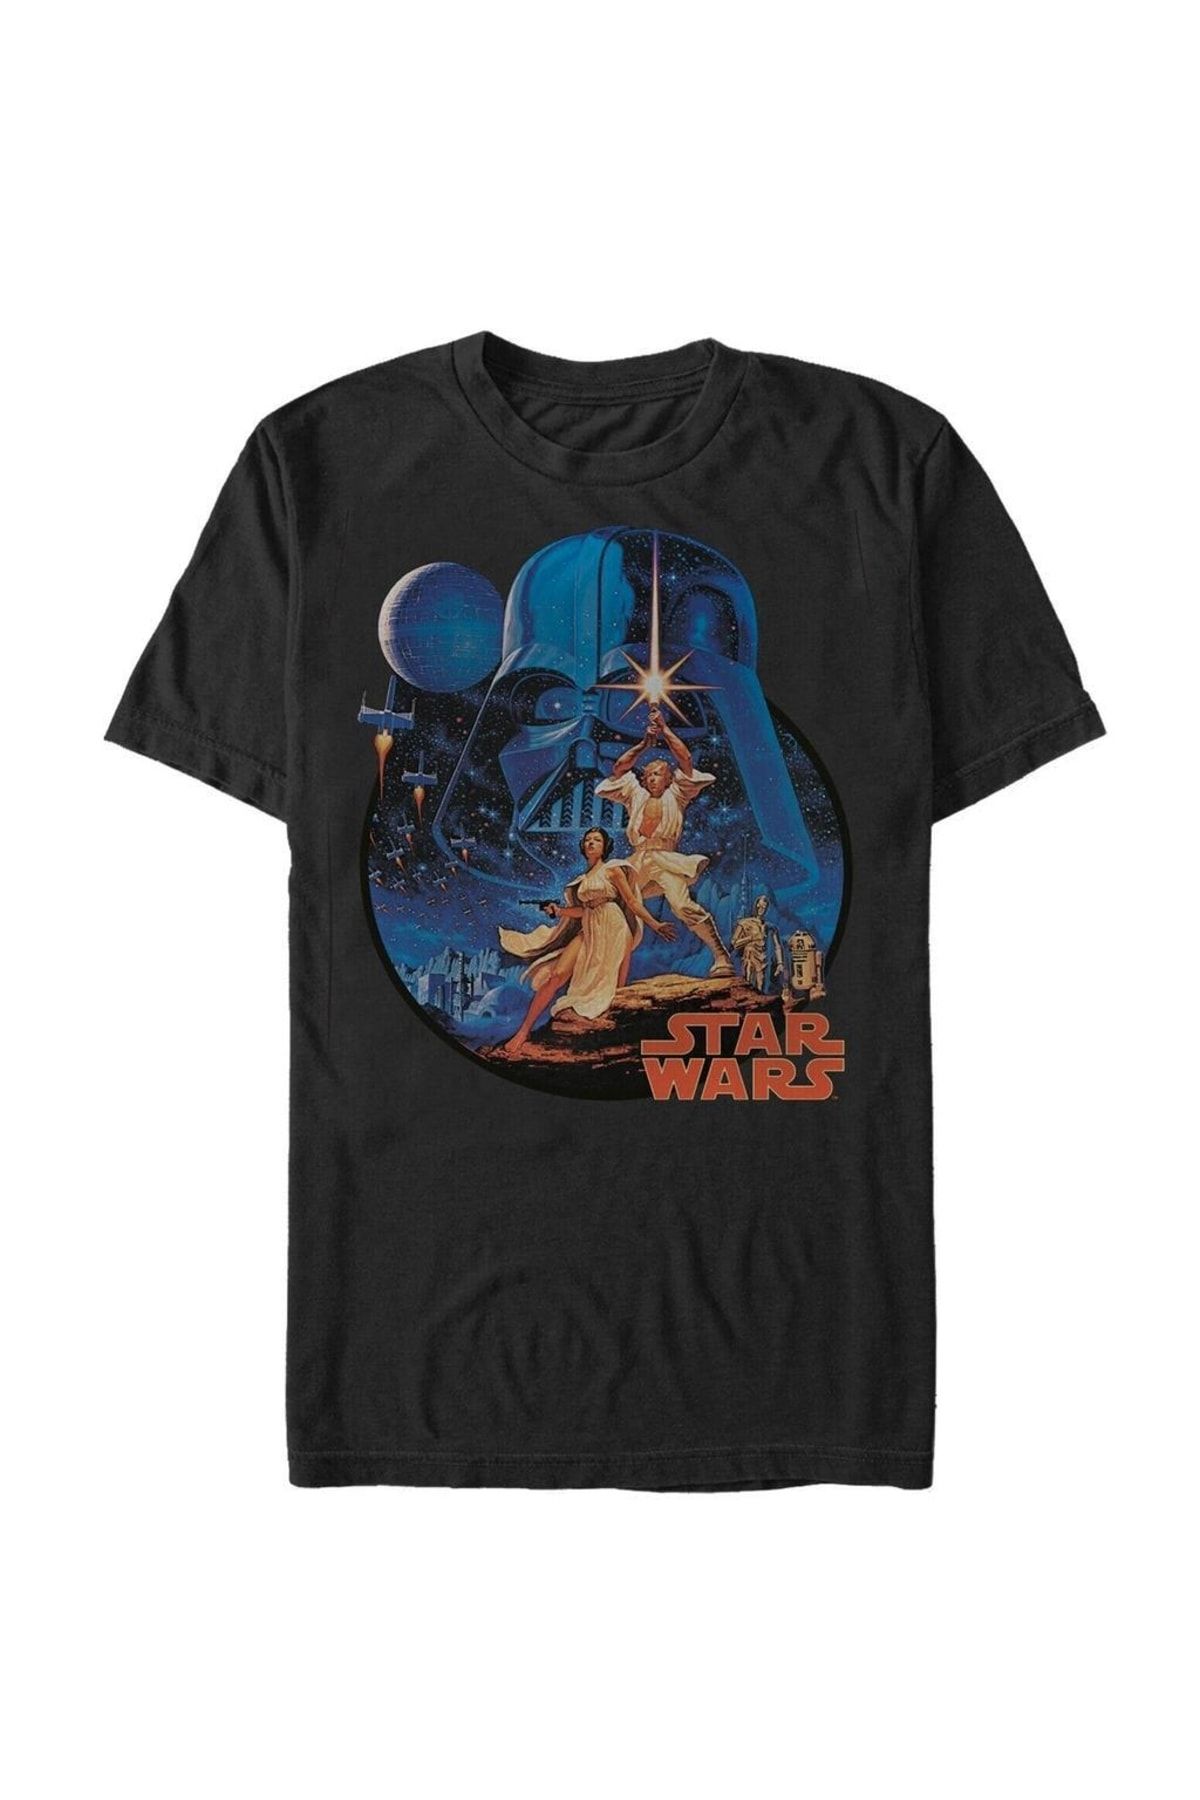 GALASHOP Star Wars Vintage Art T Shirt